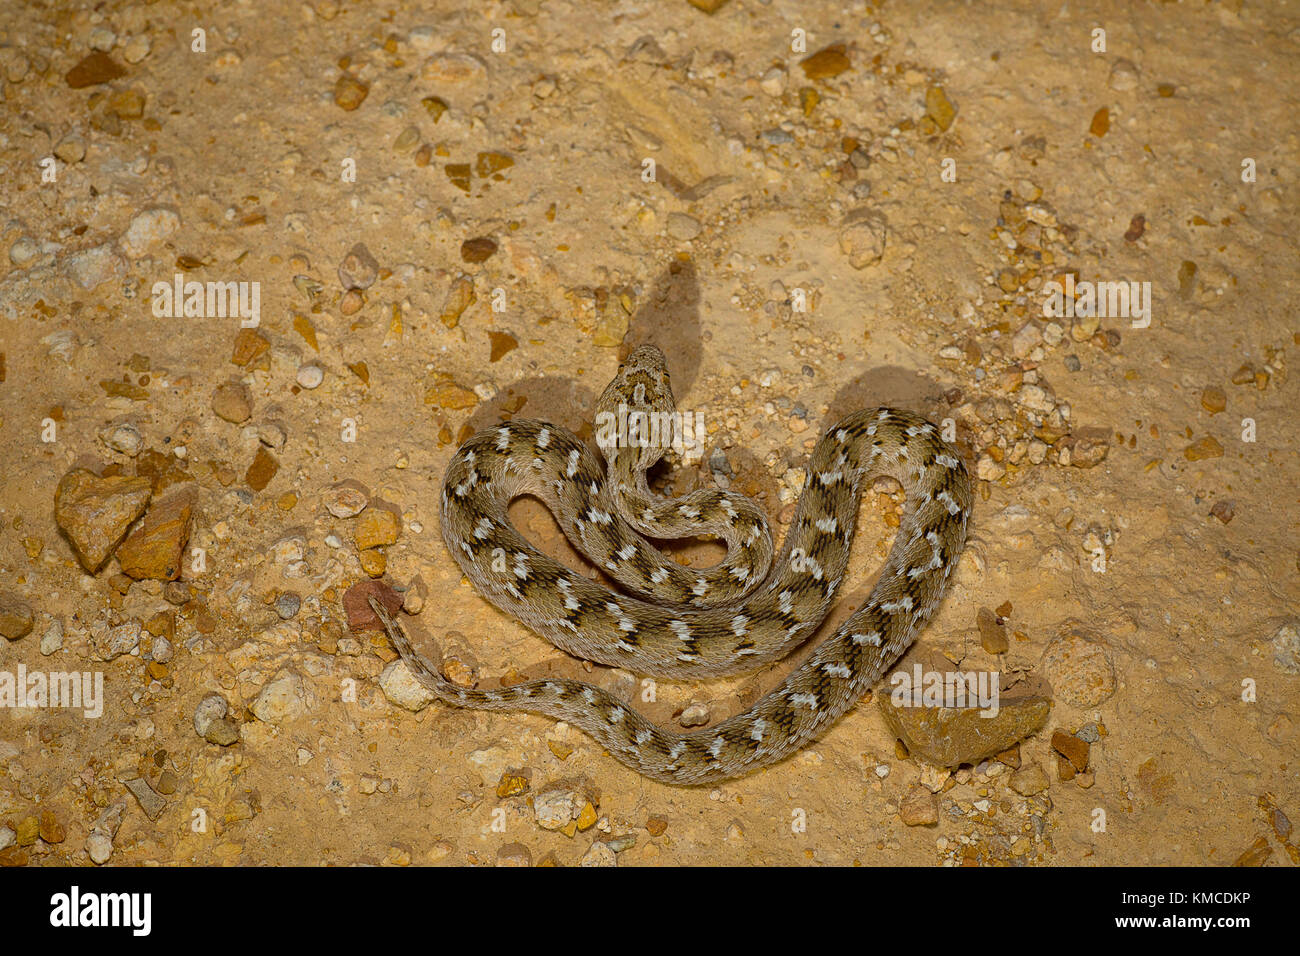 Sochurek's Saw-scaled Viper, Echis Carinatus Sochureki Desert National Park, Rajasthan, India Stock Photo